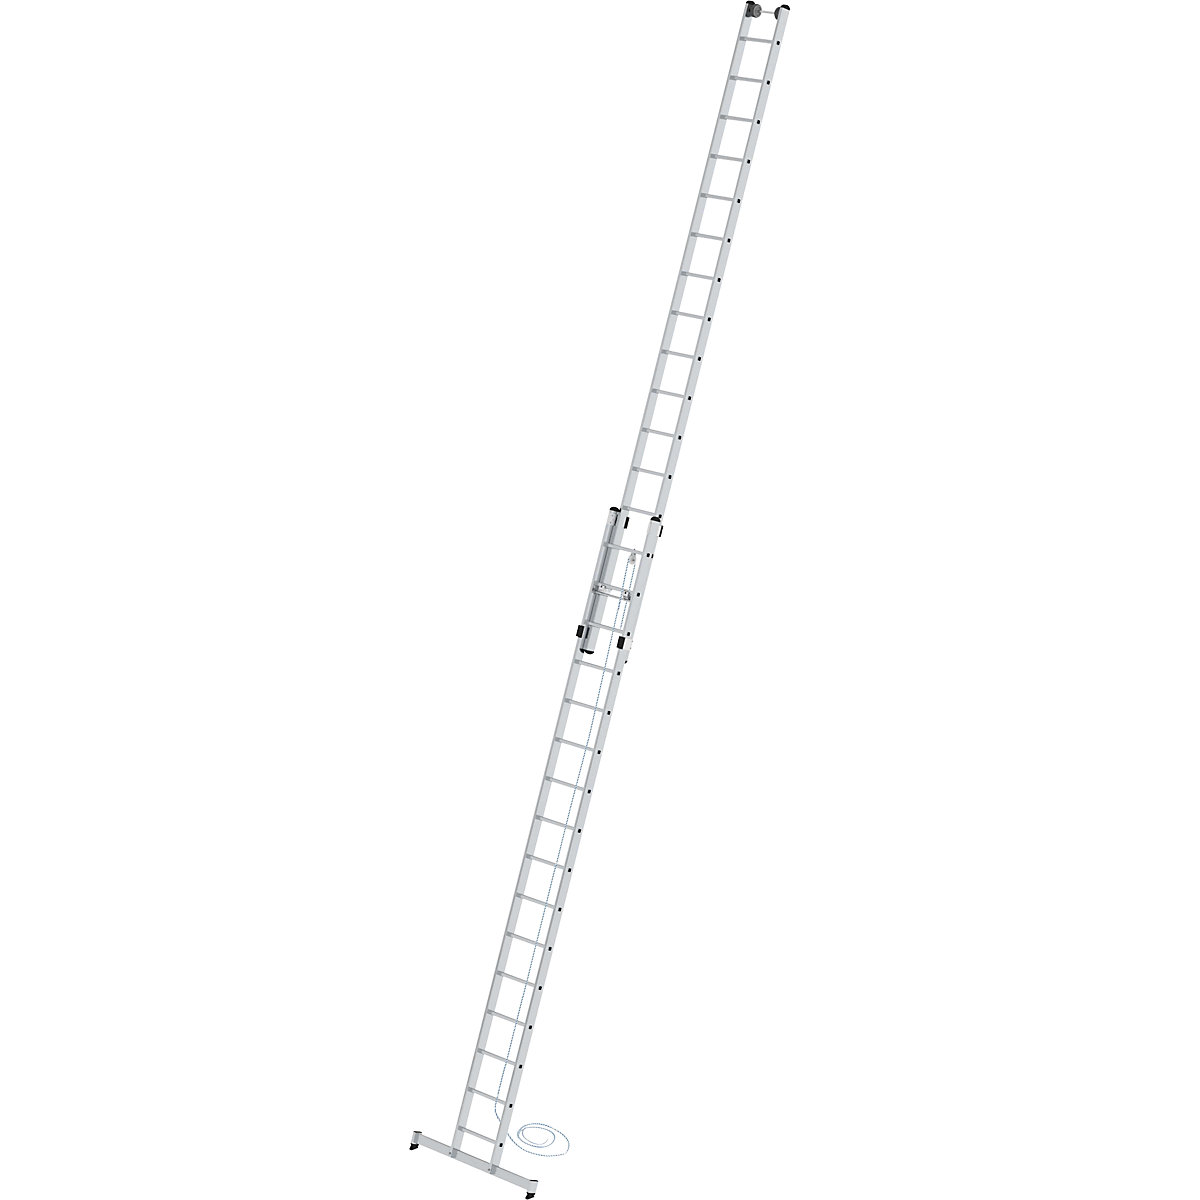 Aanlegladder, in hoogte verstelbaar – MUNK, optrekladder, 2-delig met nivello®-stabiliteitsbalk, 2 x 16 sporten-3